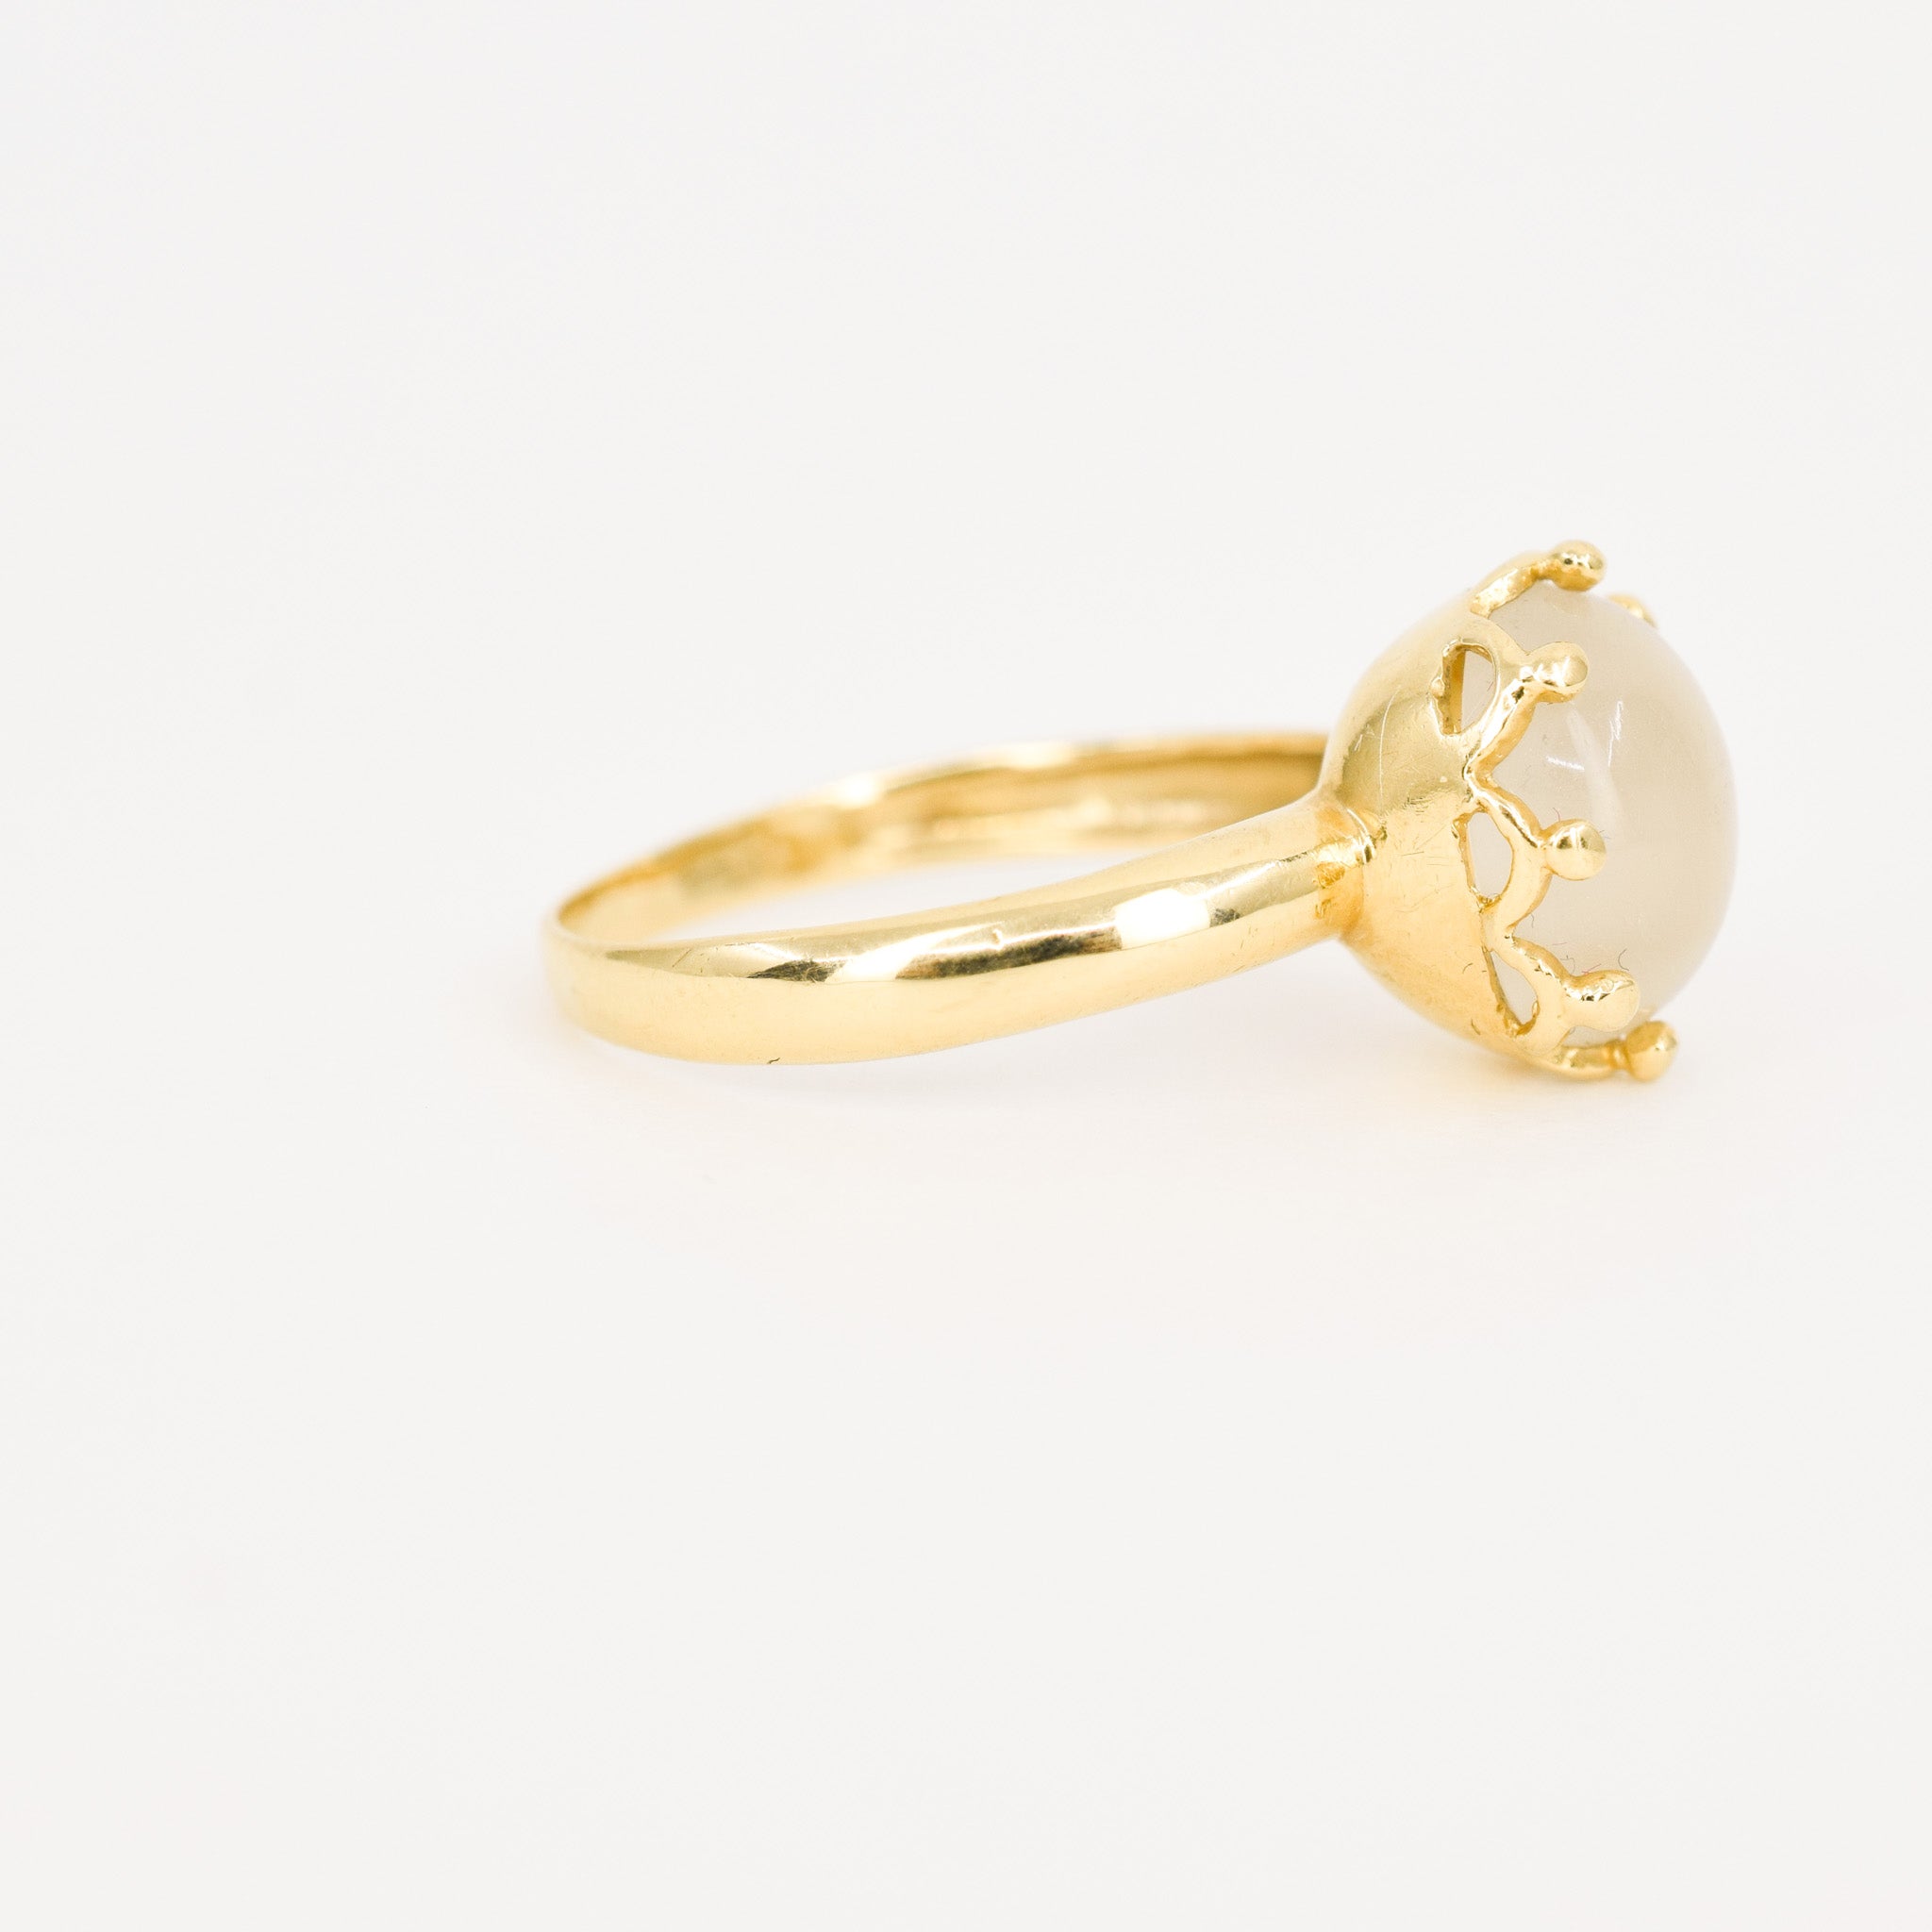 vintage 18k  moonstone ring, folklor vintage jewelry canada